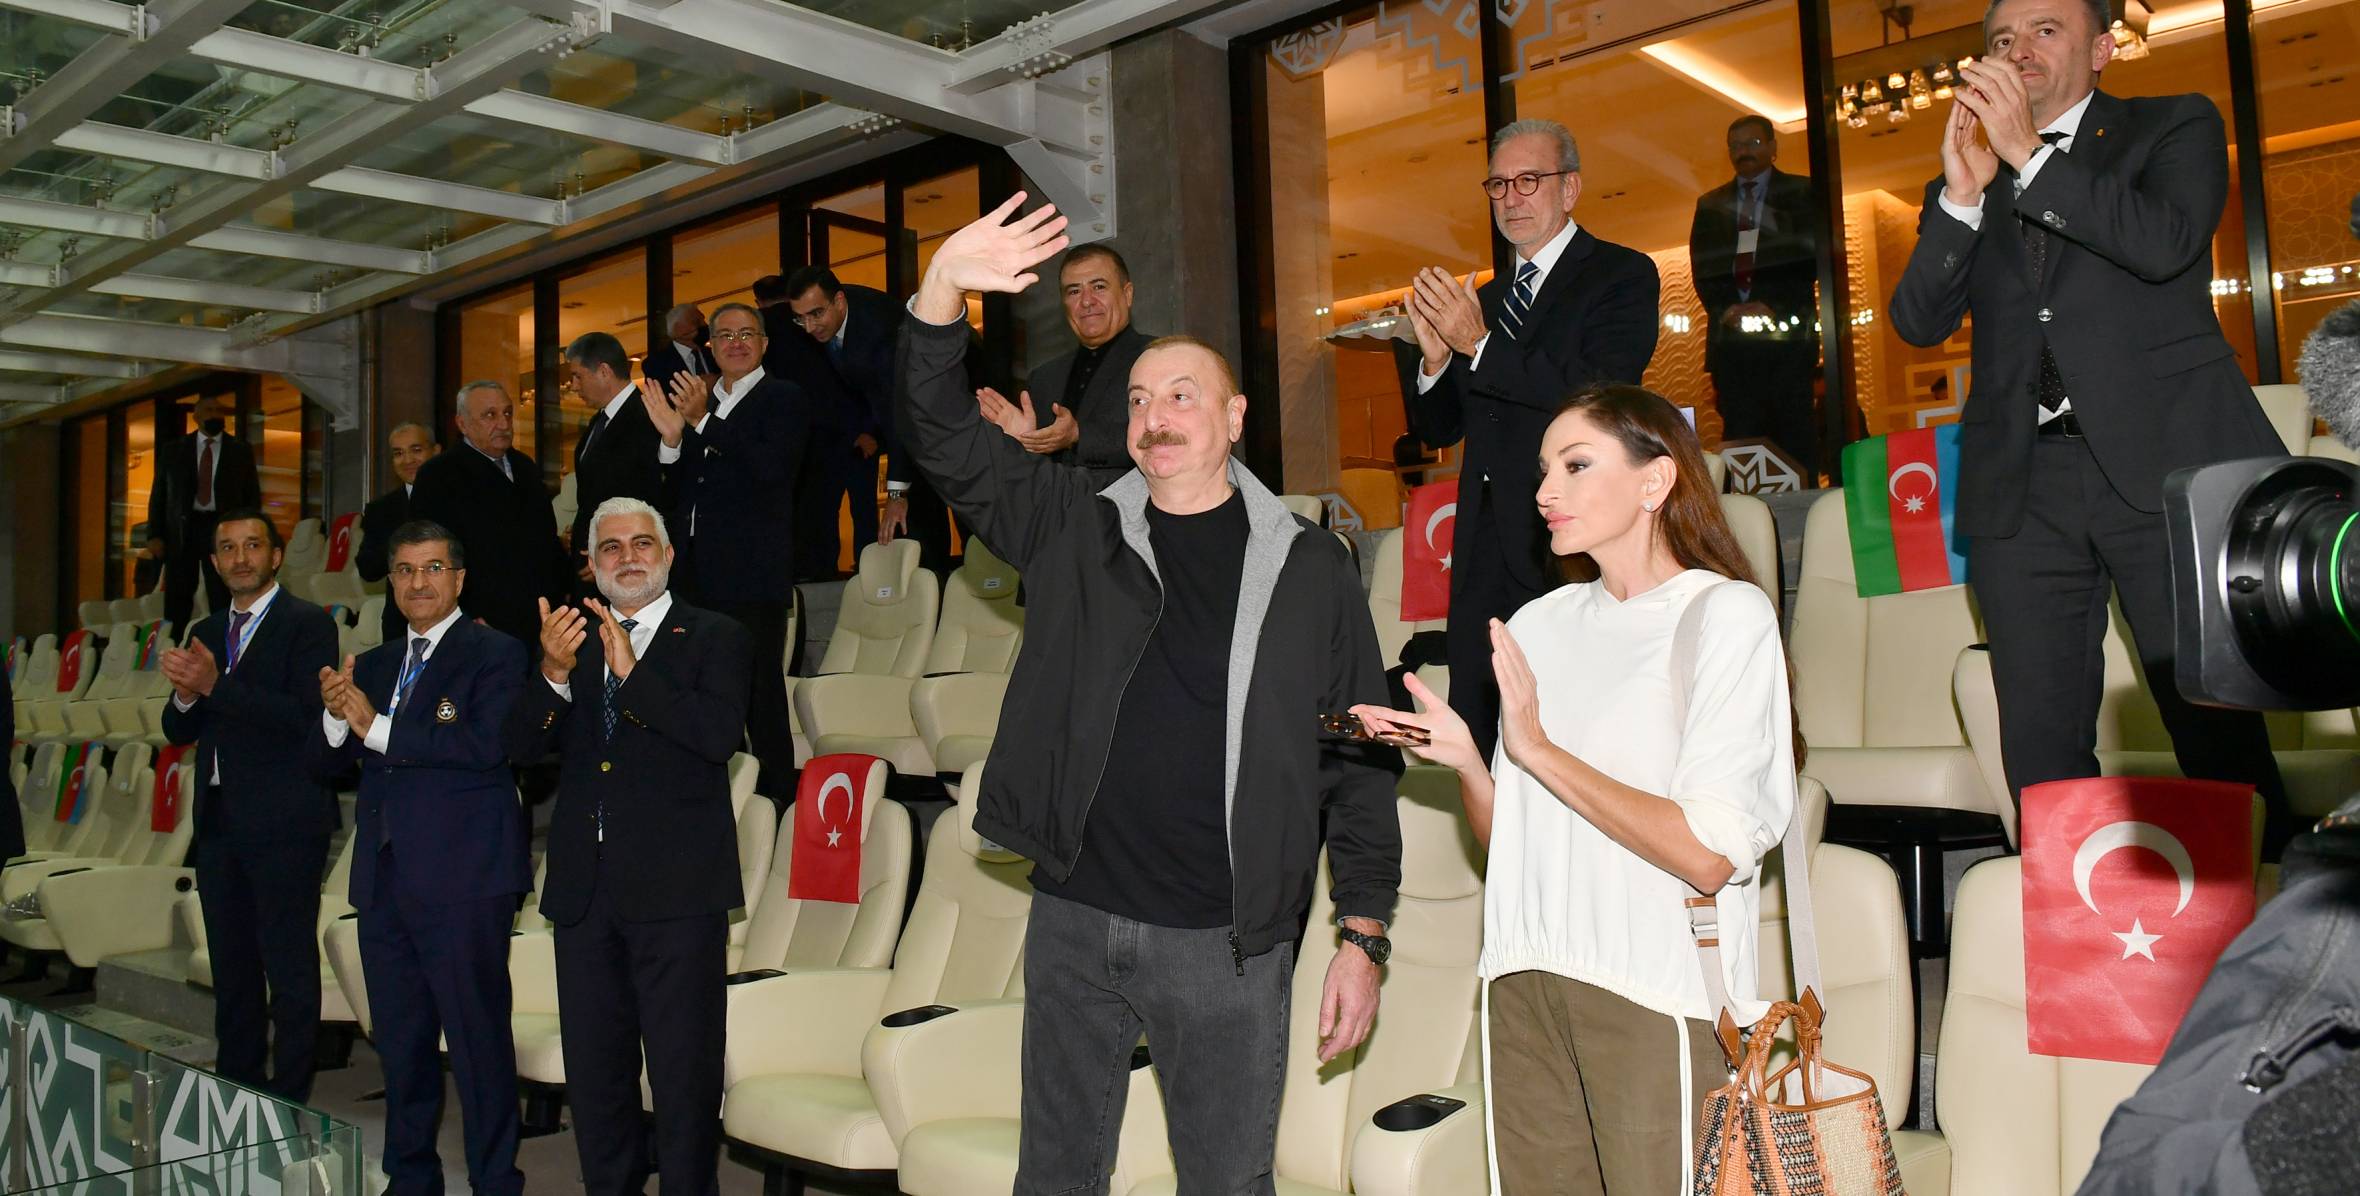 Ilham Aliyev and First Lady Mehriban Aliyeva watched Qarabag vs Galatasaray charity match